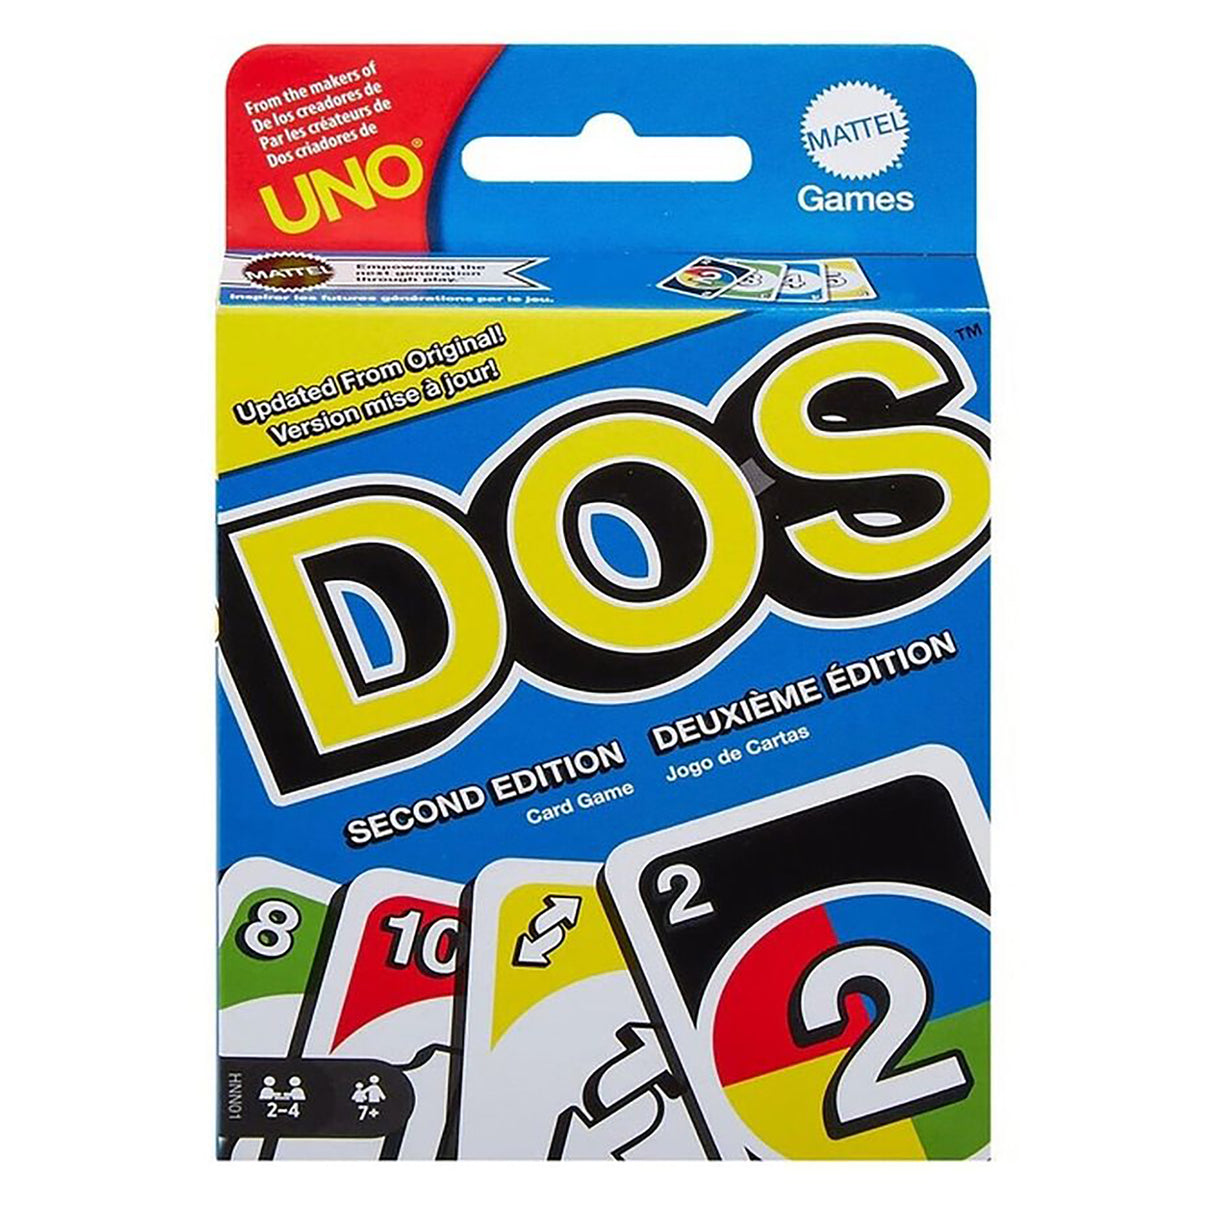 UNO DOS Second Edition Card Game